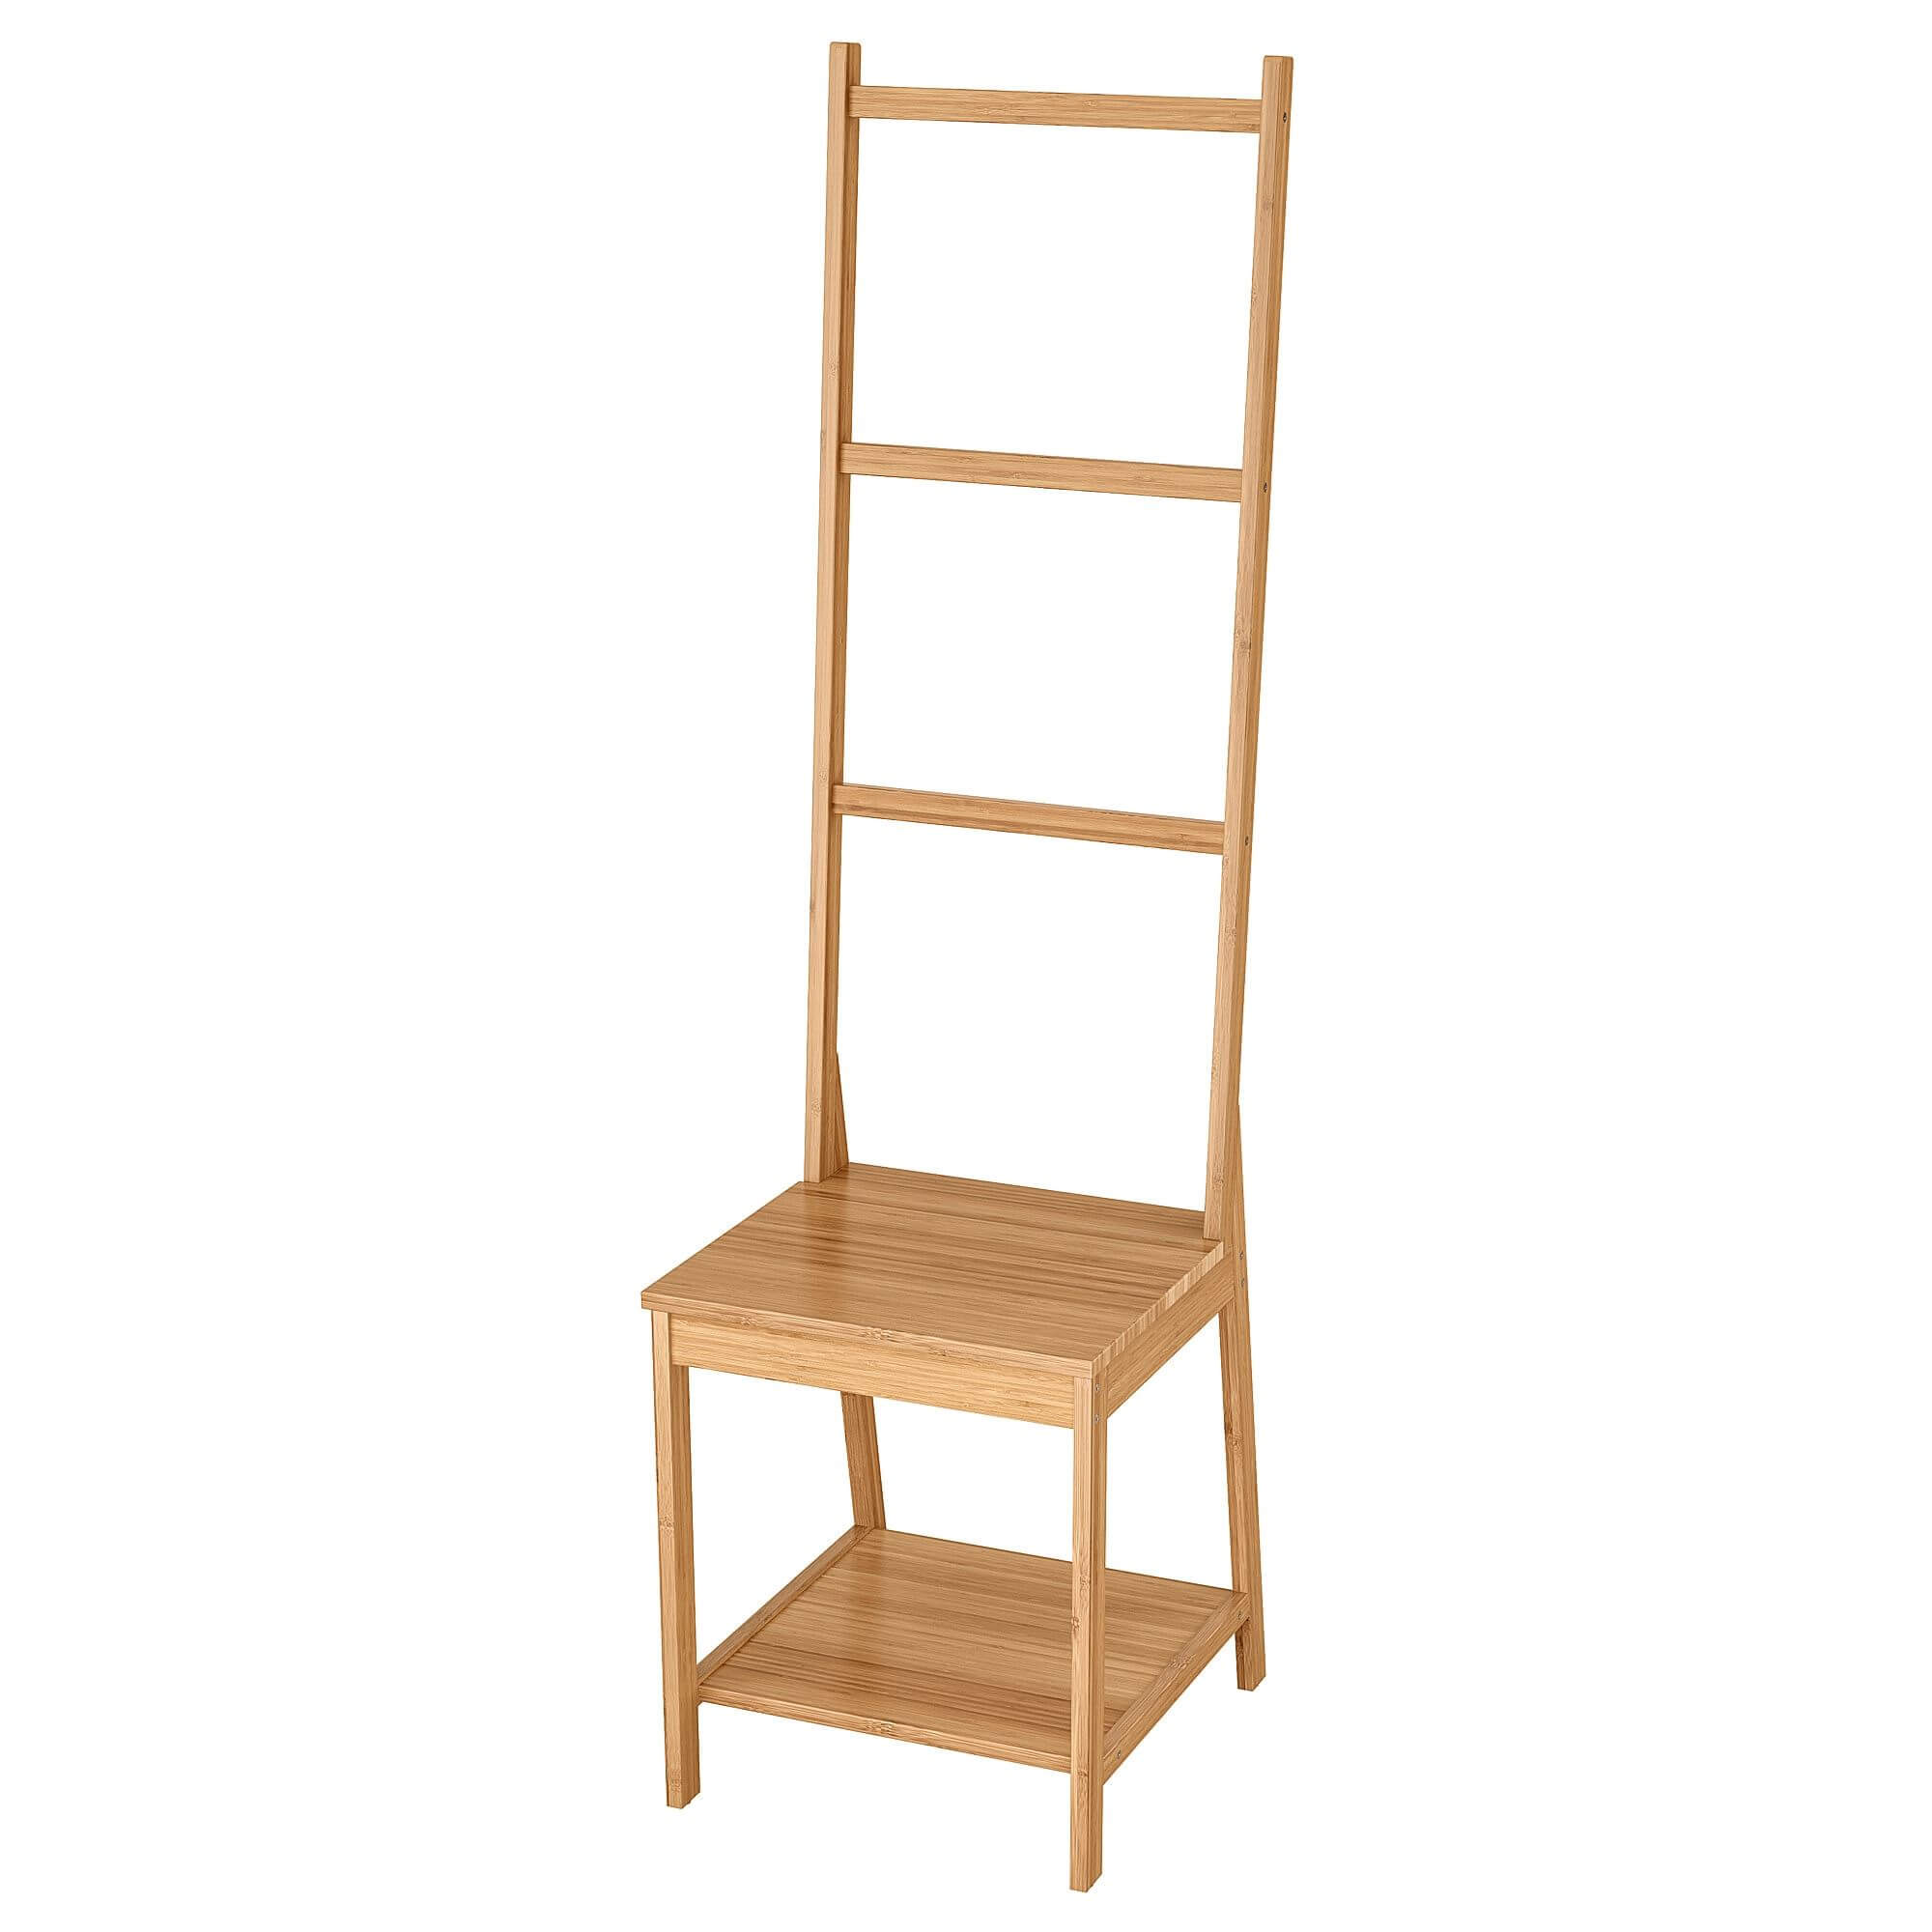 Стул с держателями для полотенец Ikea Ragrund, 39x44x140, бамбук ikea норрарид стул